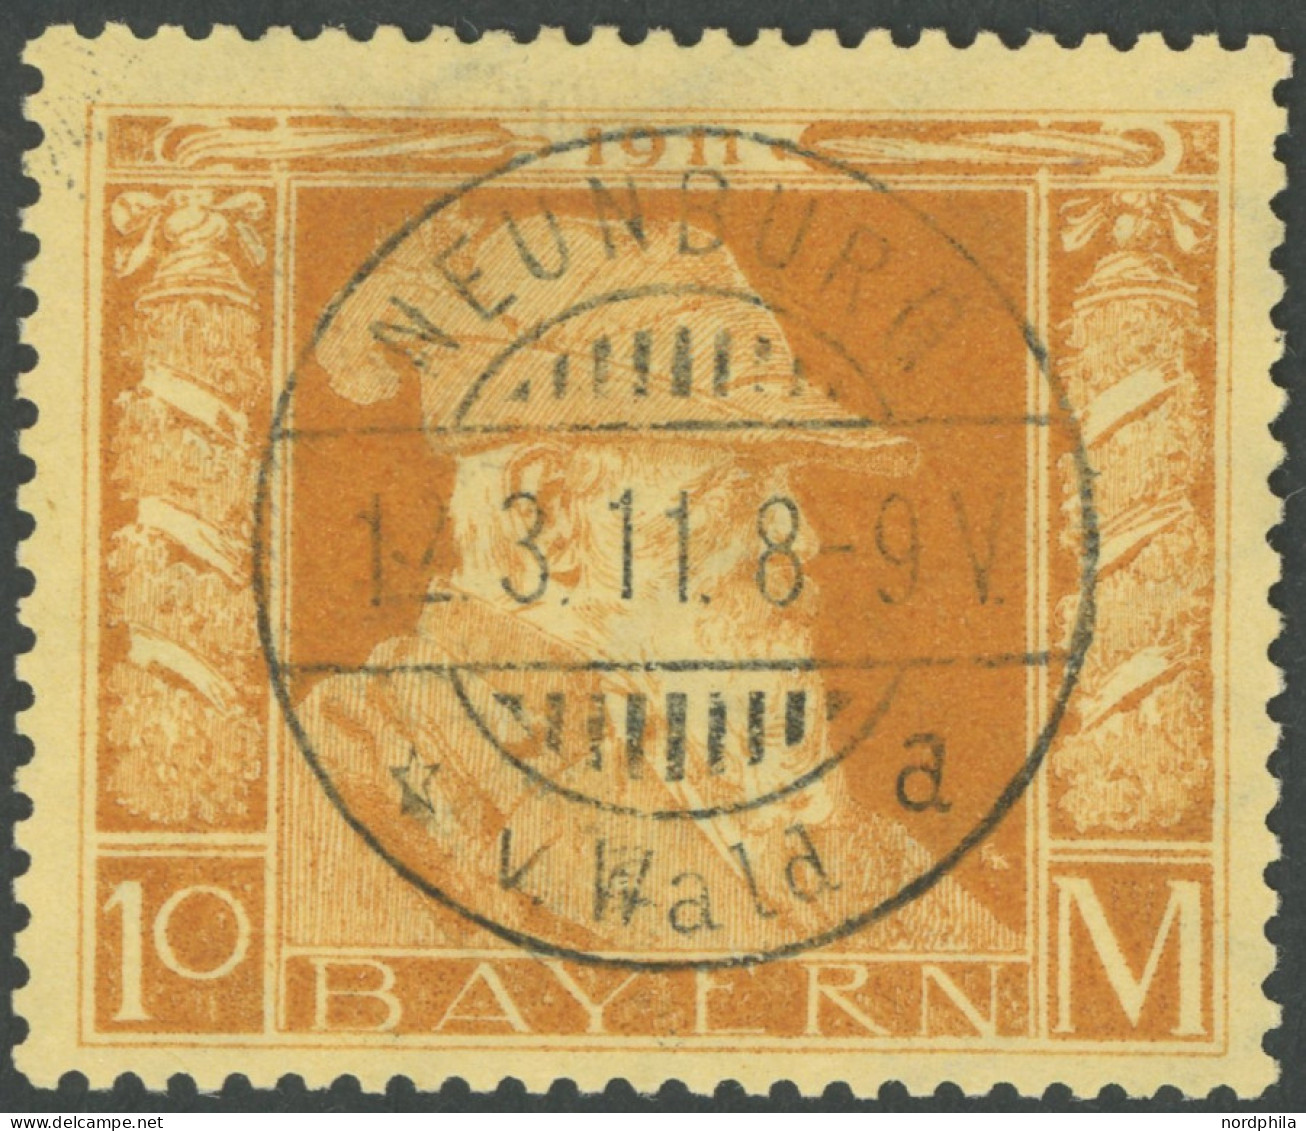 BAYERN 90II O, 1911, 10 M. Luitpold, Type II, Idealer Stempel NEUENBURG V. WALD, Pracht, Mi. 400.- - Oblitérés